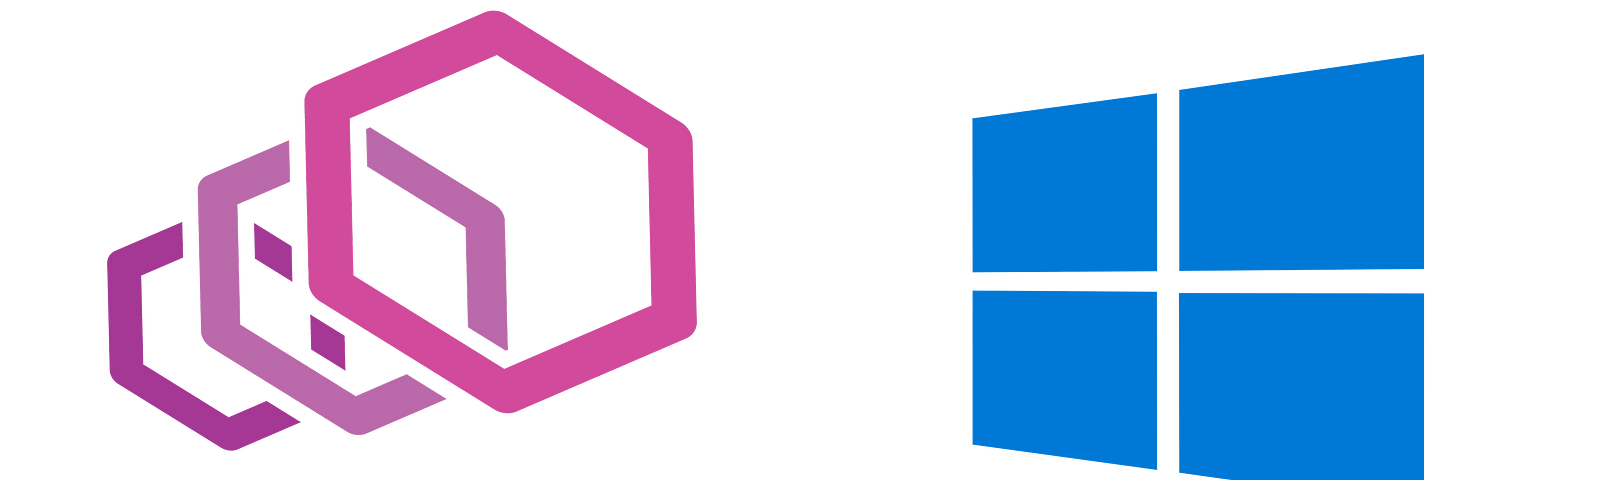 Envoy and Microsoft logo